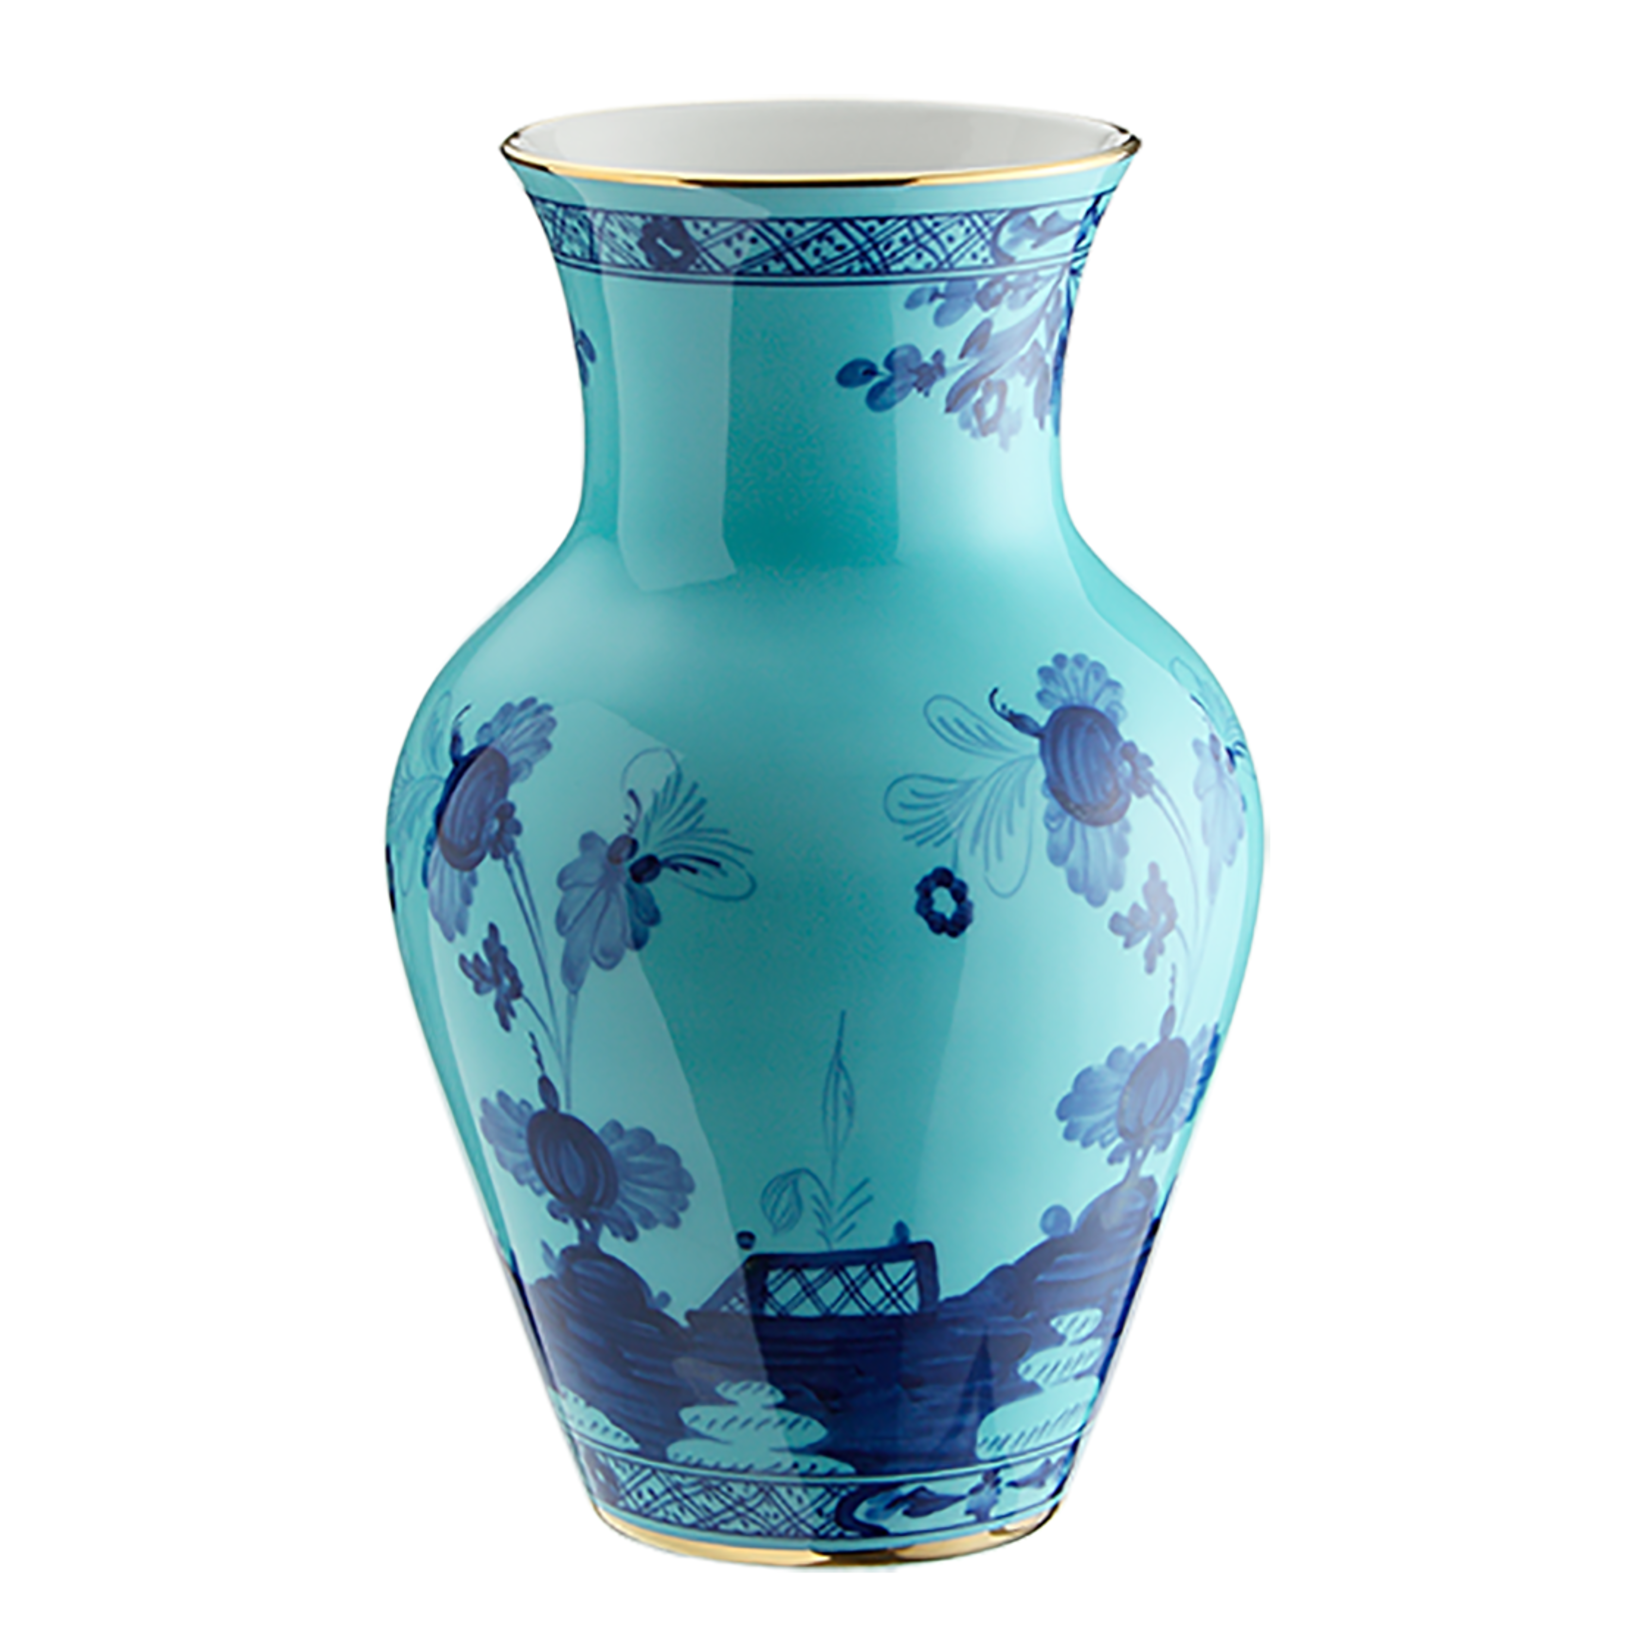 Richard Ginori 1735 Inc Large Ming Vase Oriente Italiano -Iris